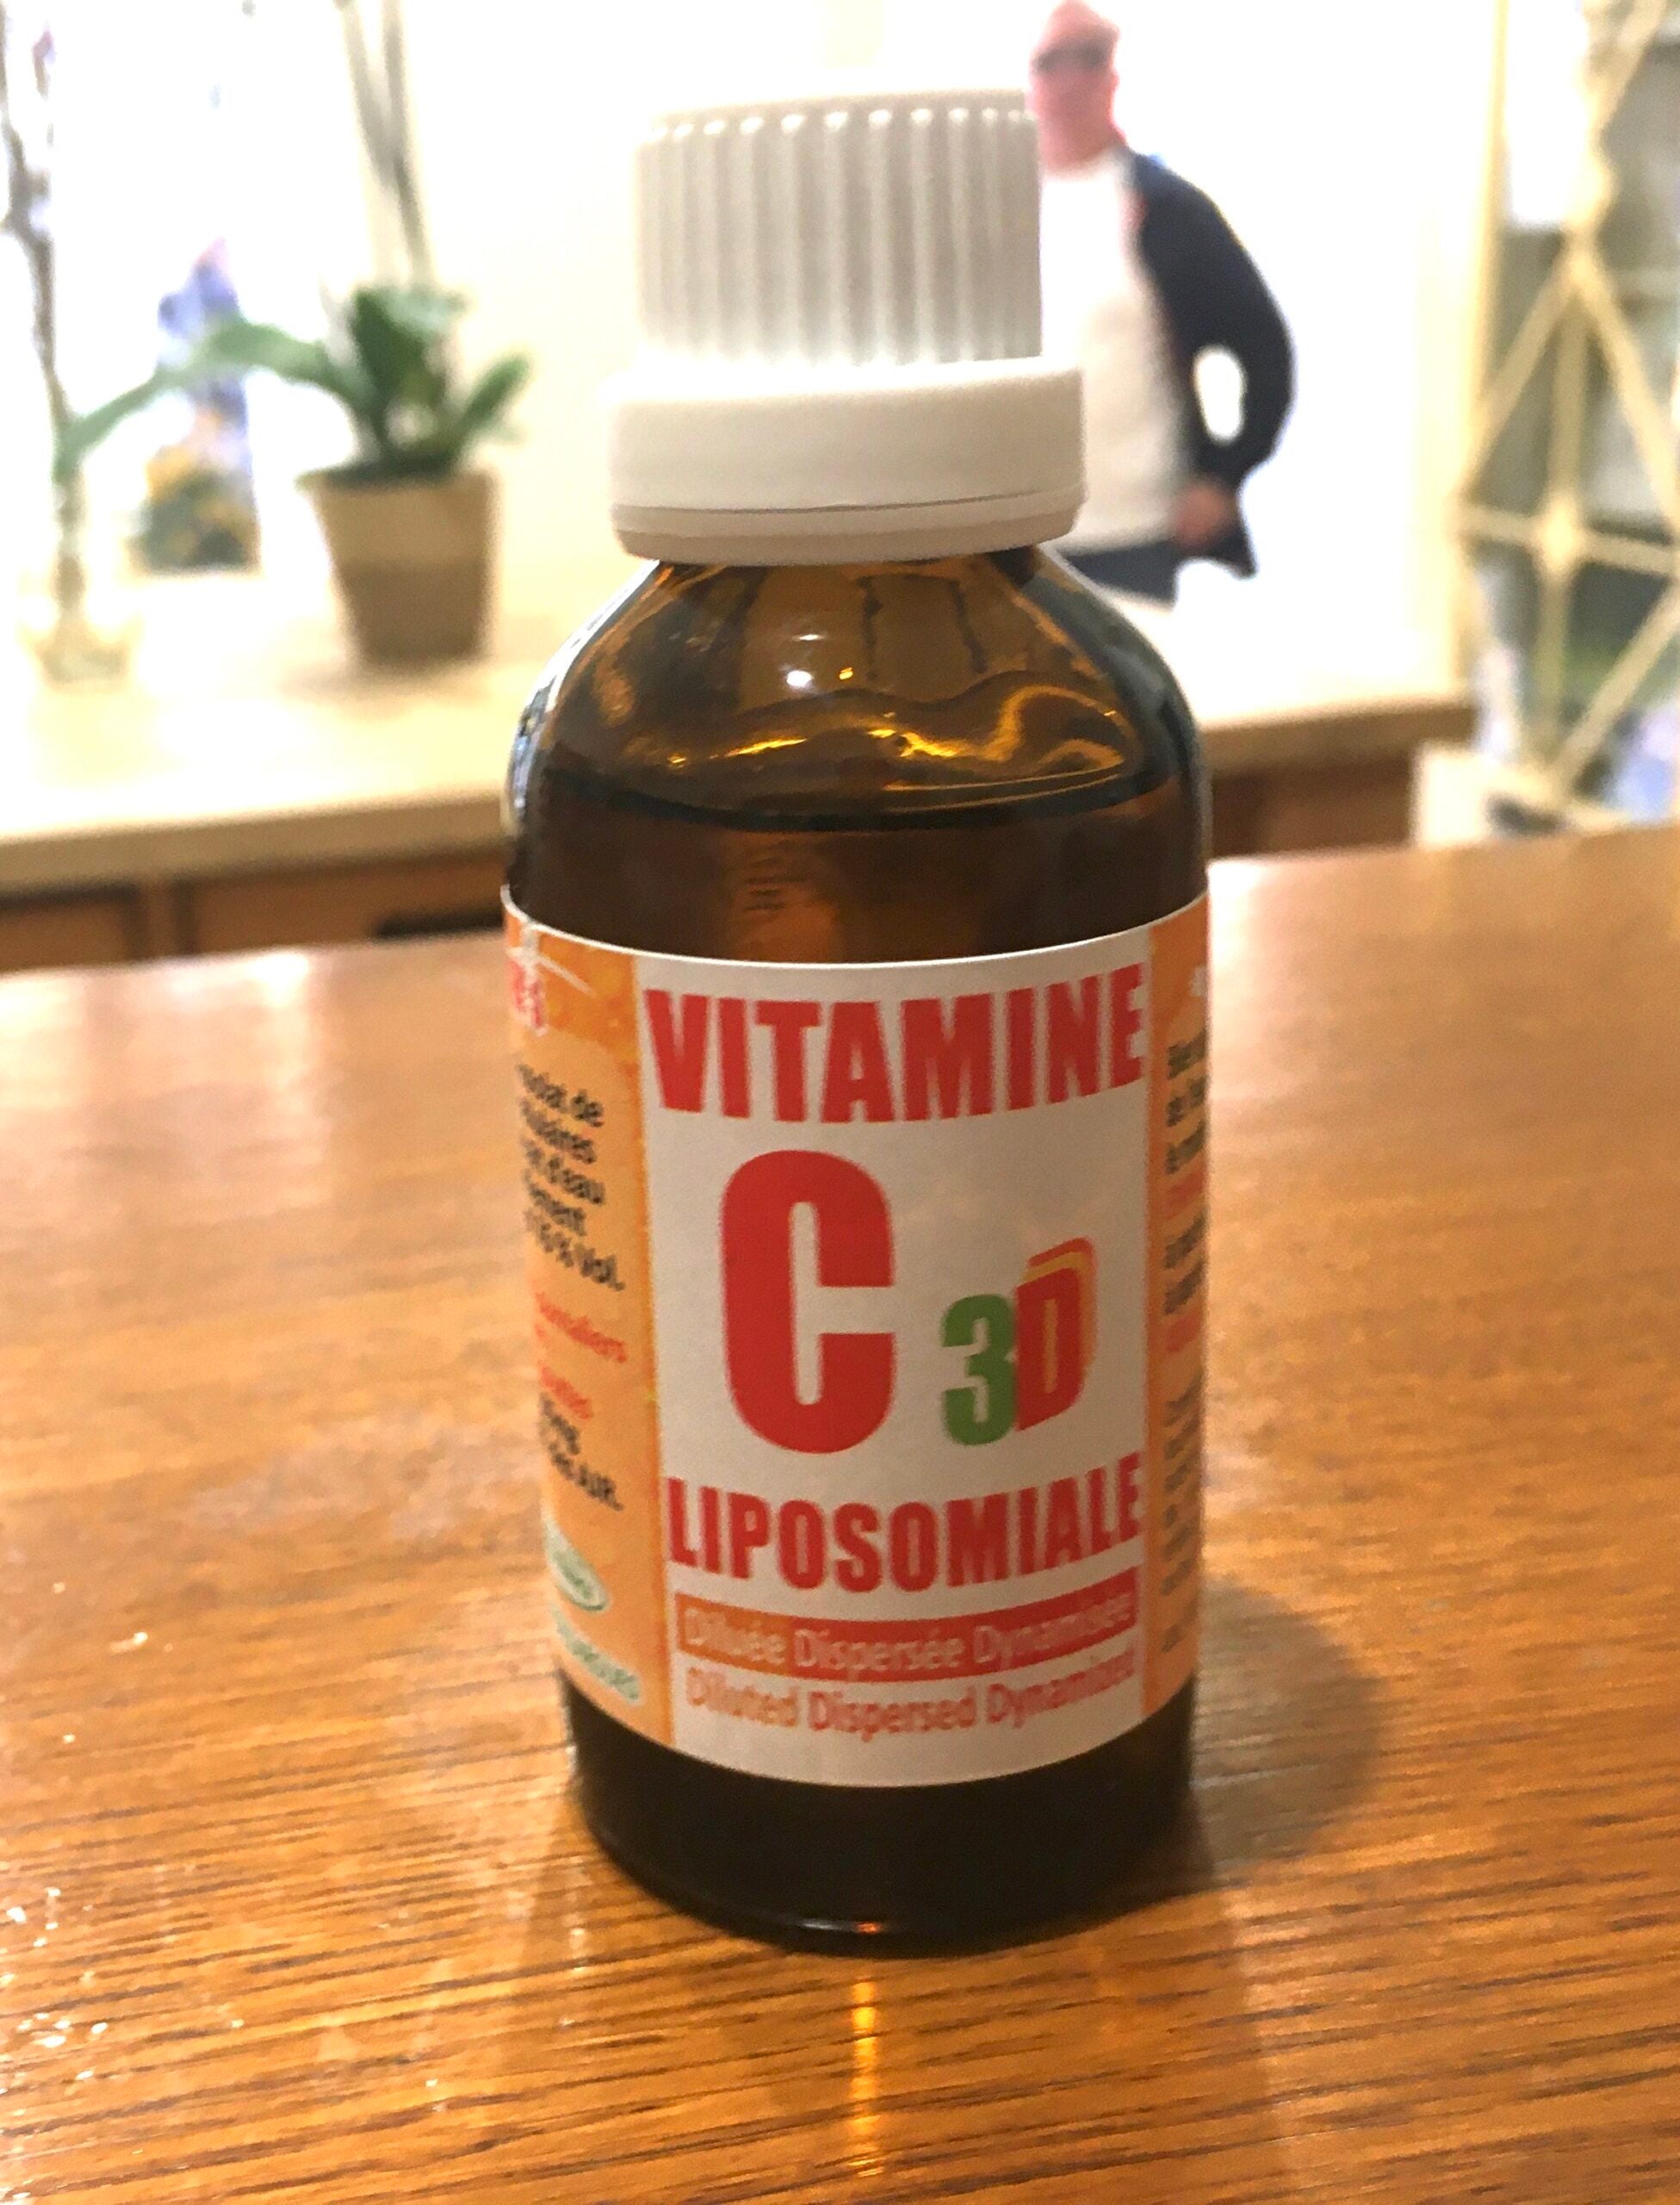 Vitamine C 3D Liposomiale